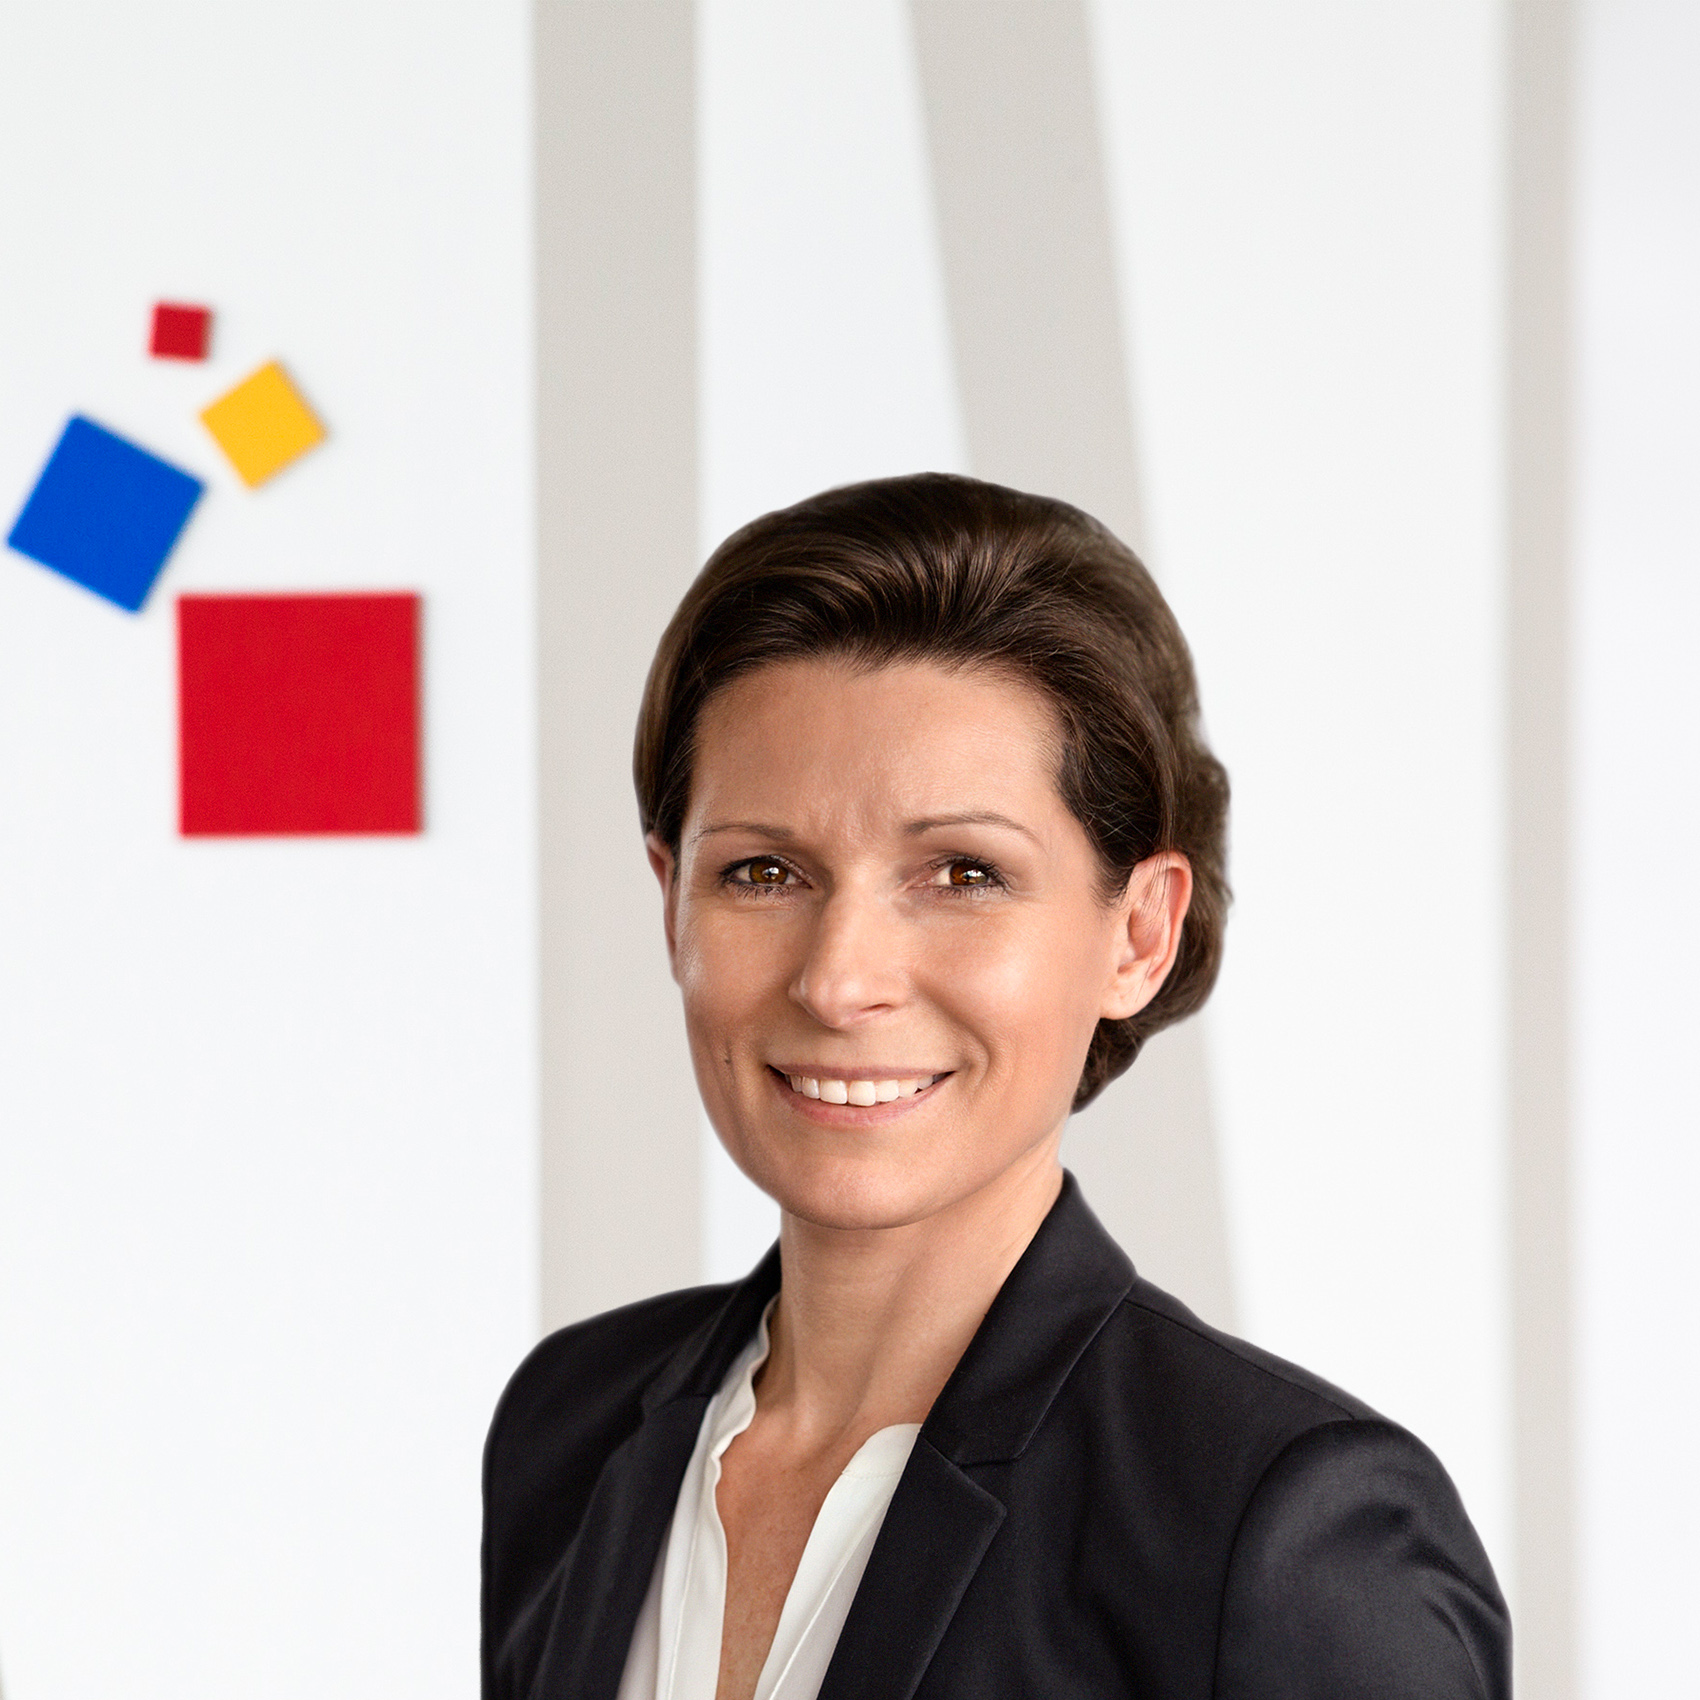 Martina Bergmann, Managing Director, Messe Frankfurt GmbH